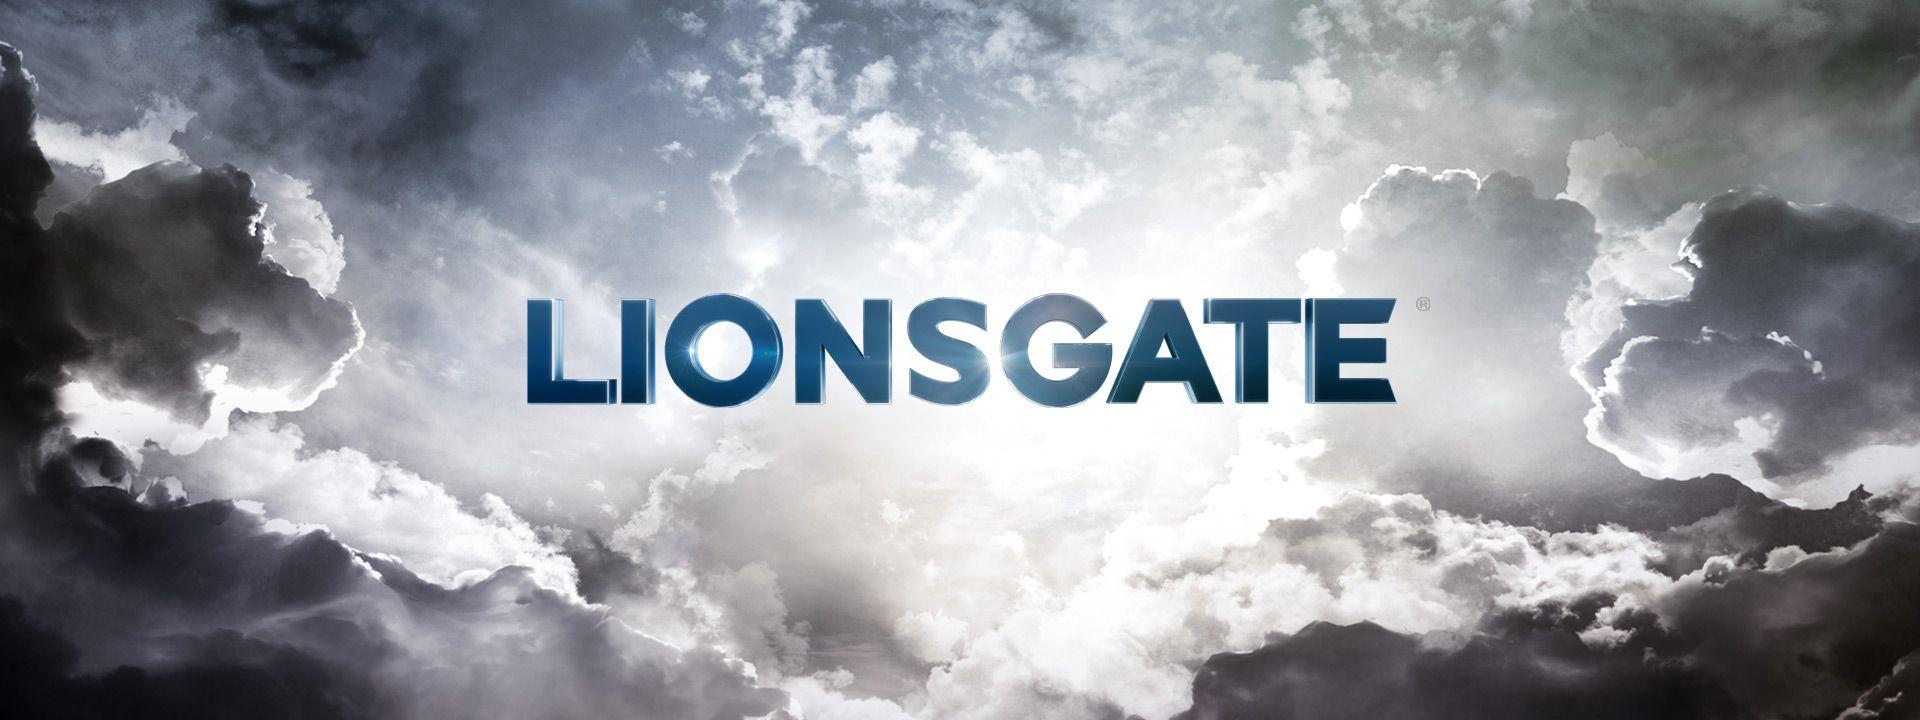 Lionsgate Logo - Lionsgate-logo - Bonafide